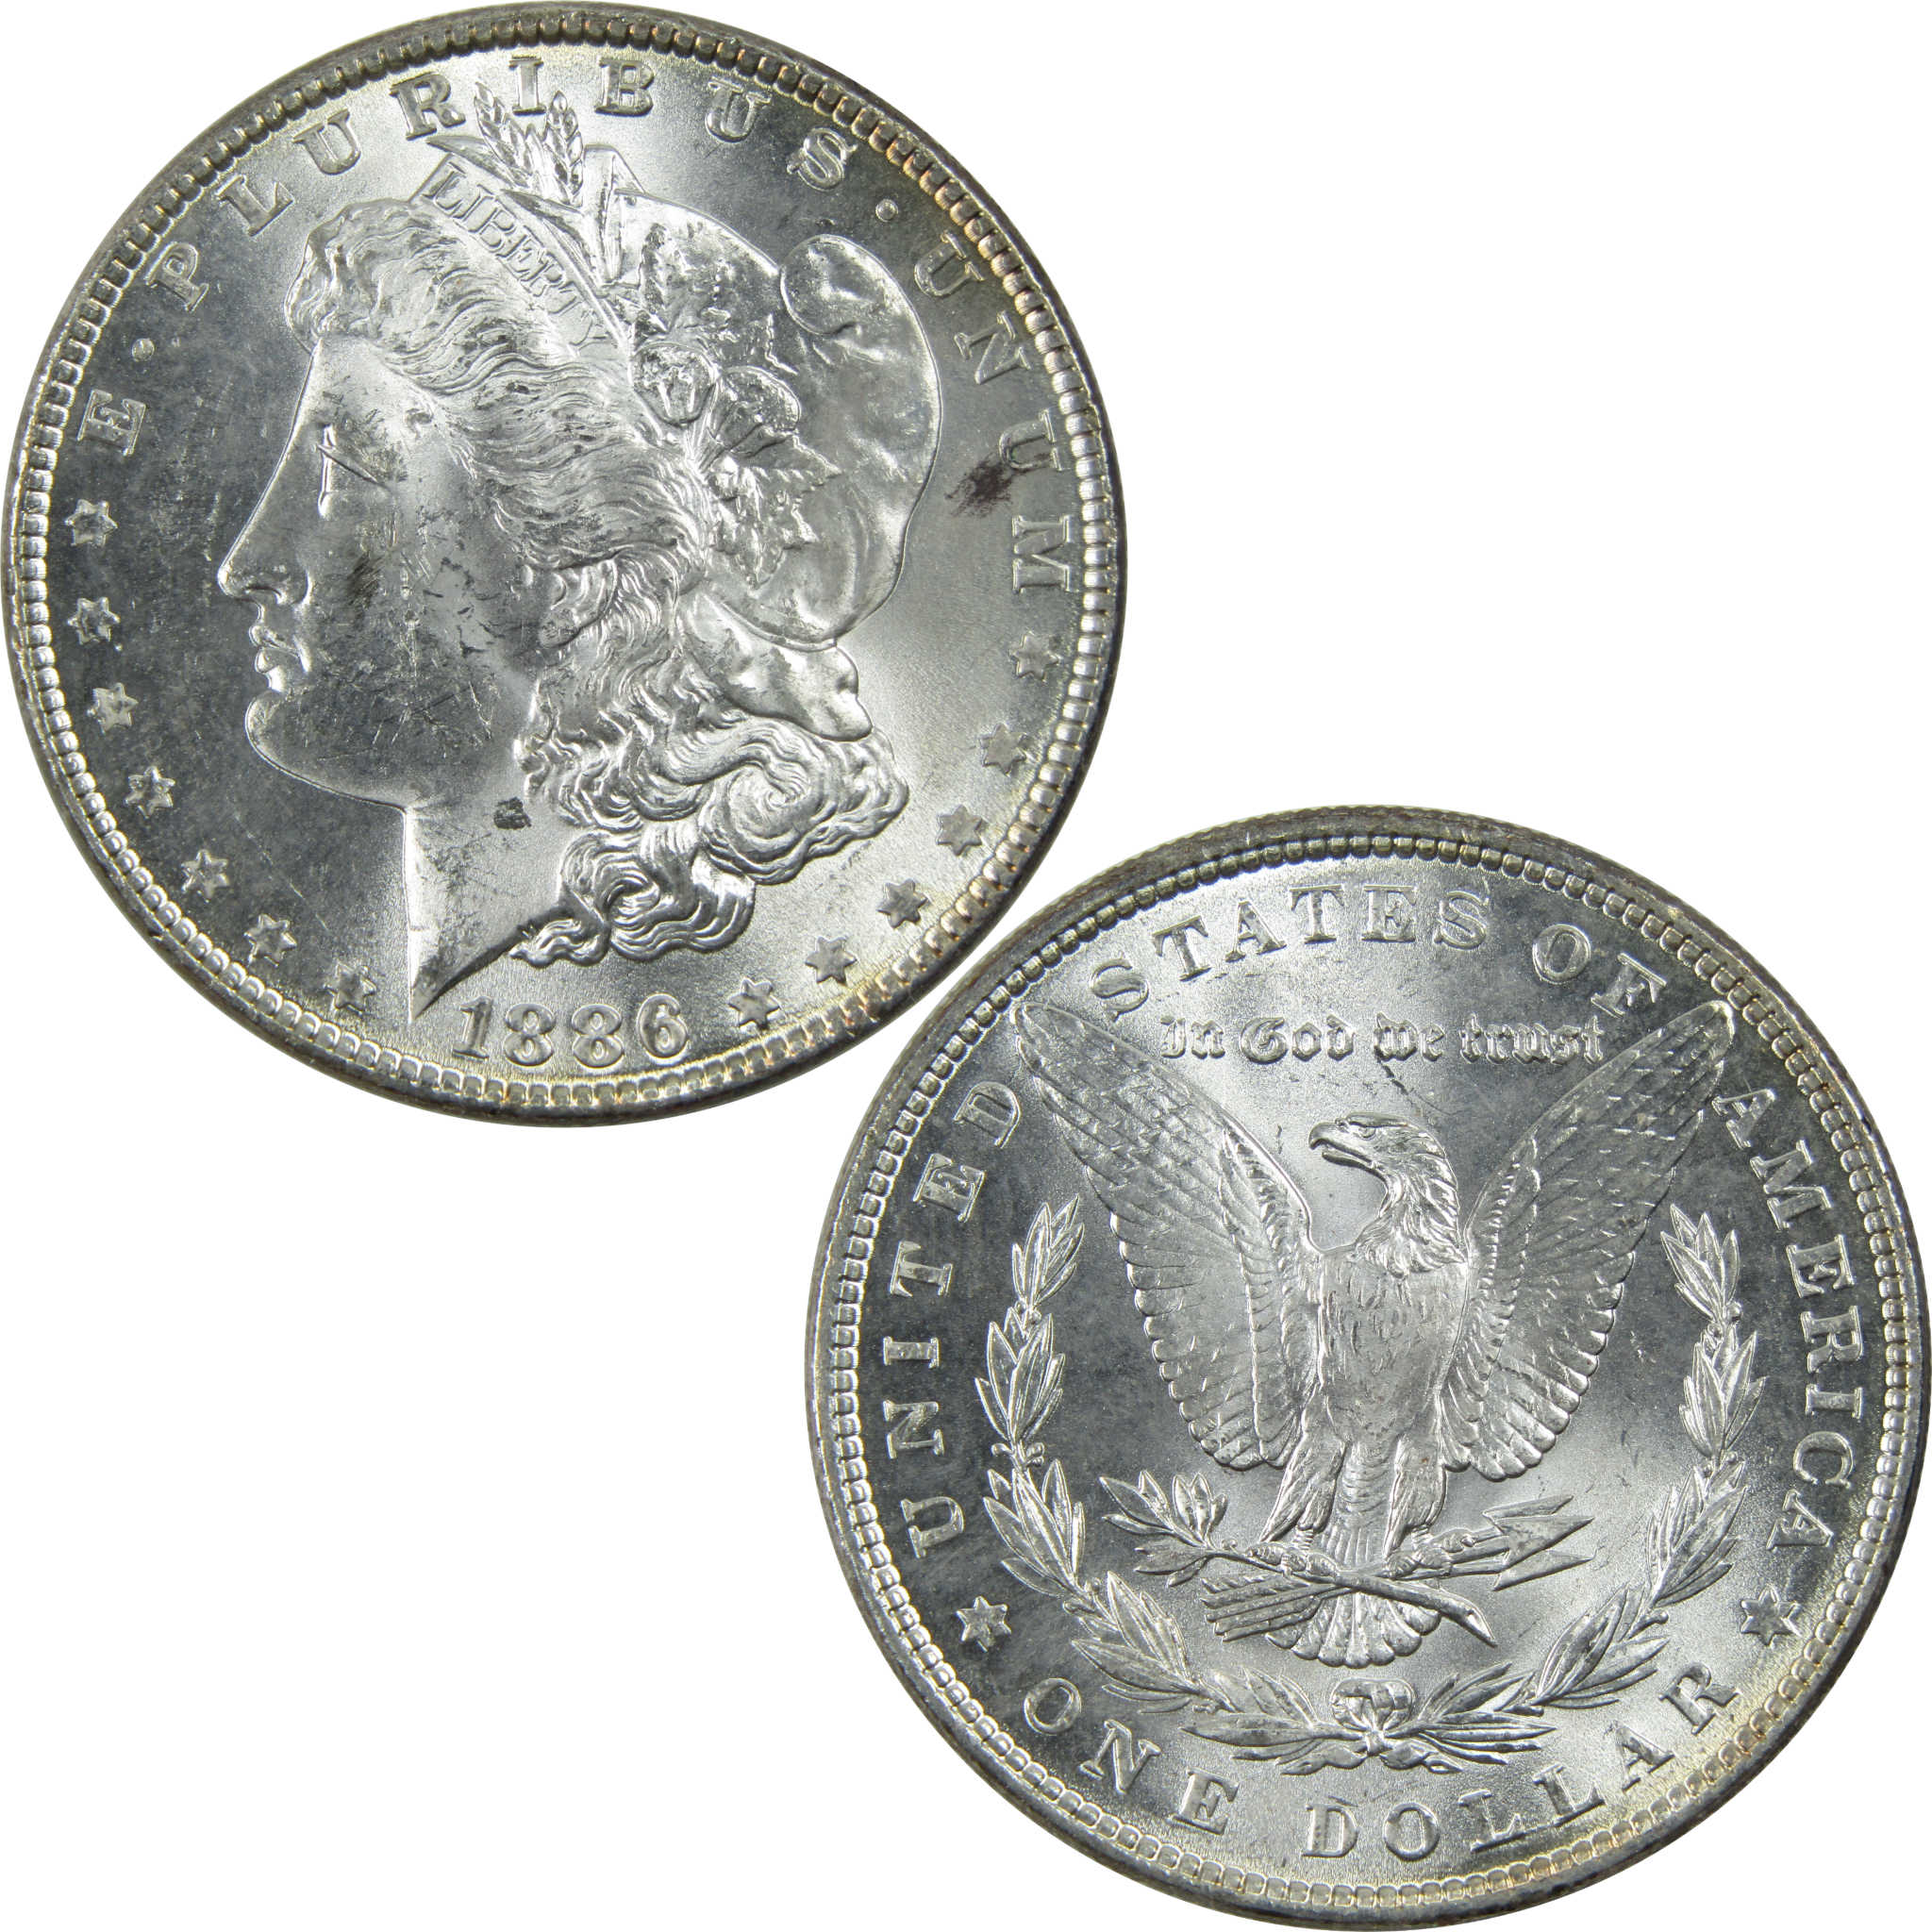 1886 Morgan Dollar Uncirculated Silver $1 Coin SKU:I13424 - Morgan coin - Morgan silver dollar - Morgan silver dollar for sale - Profile Coins &amp; Collectibles